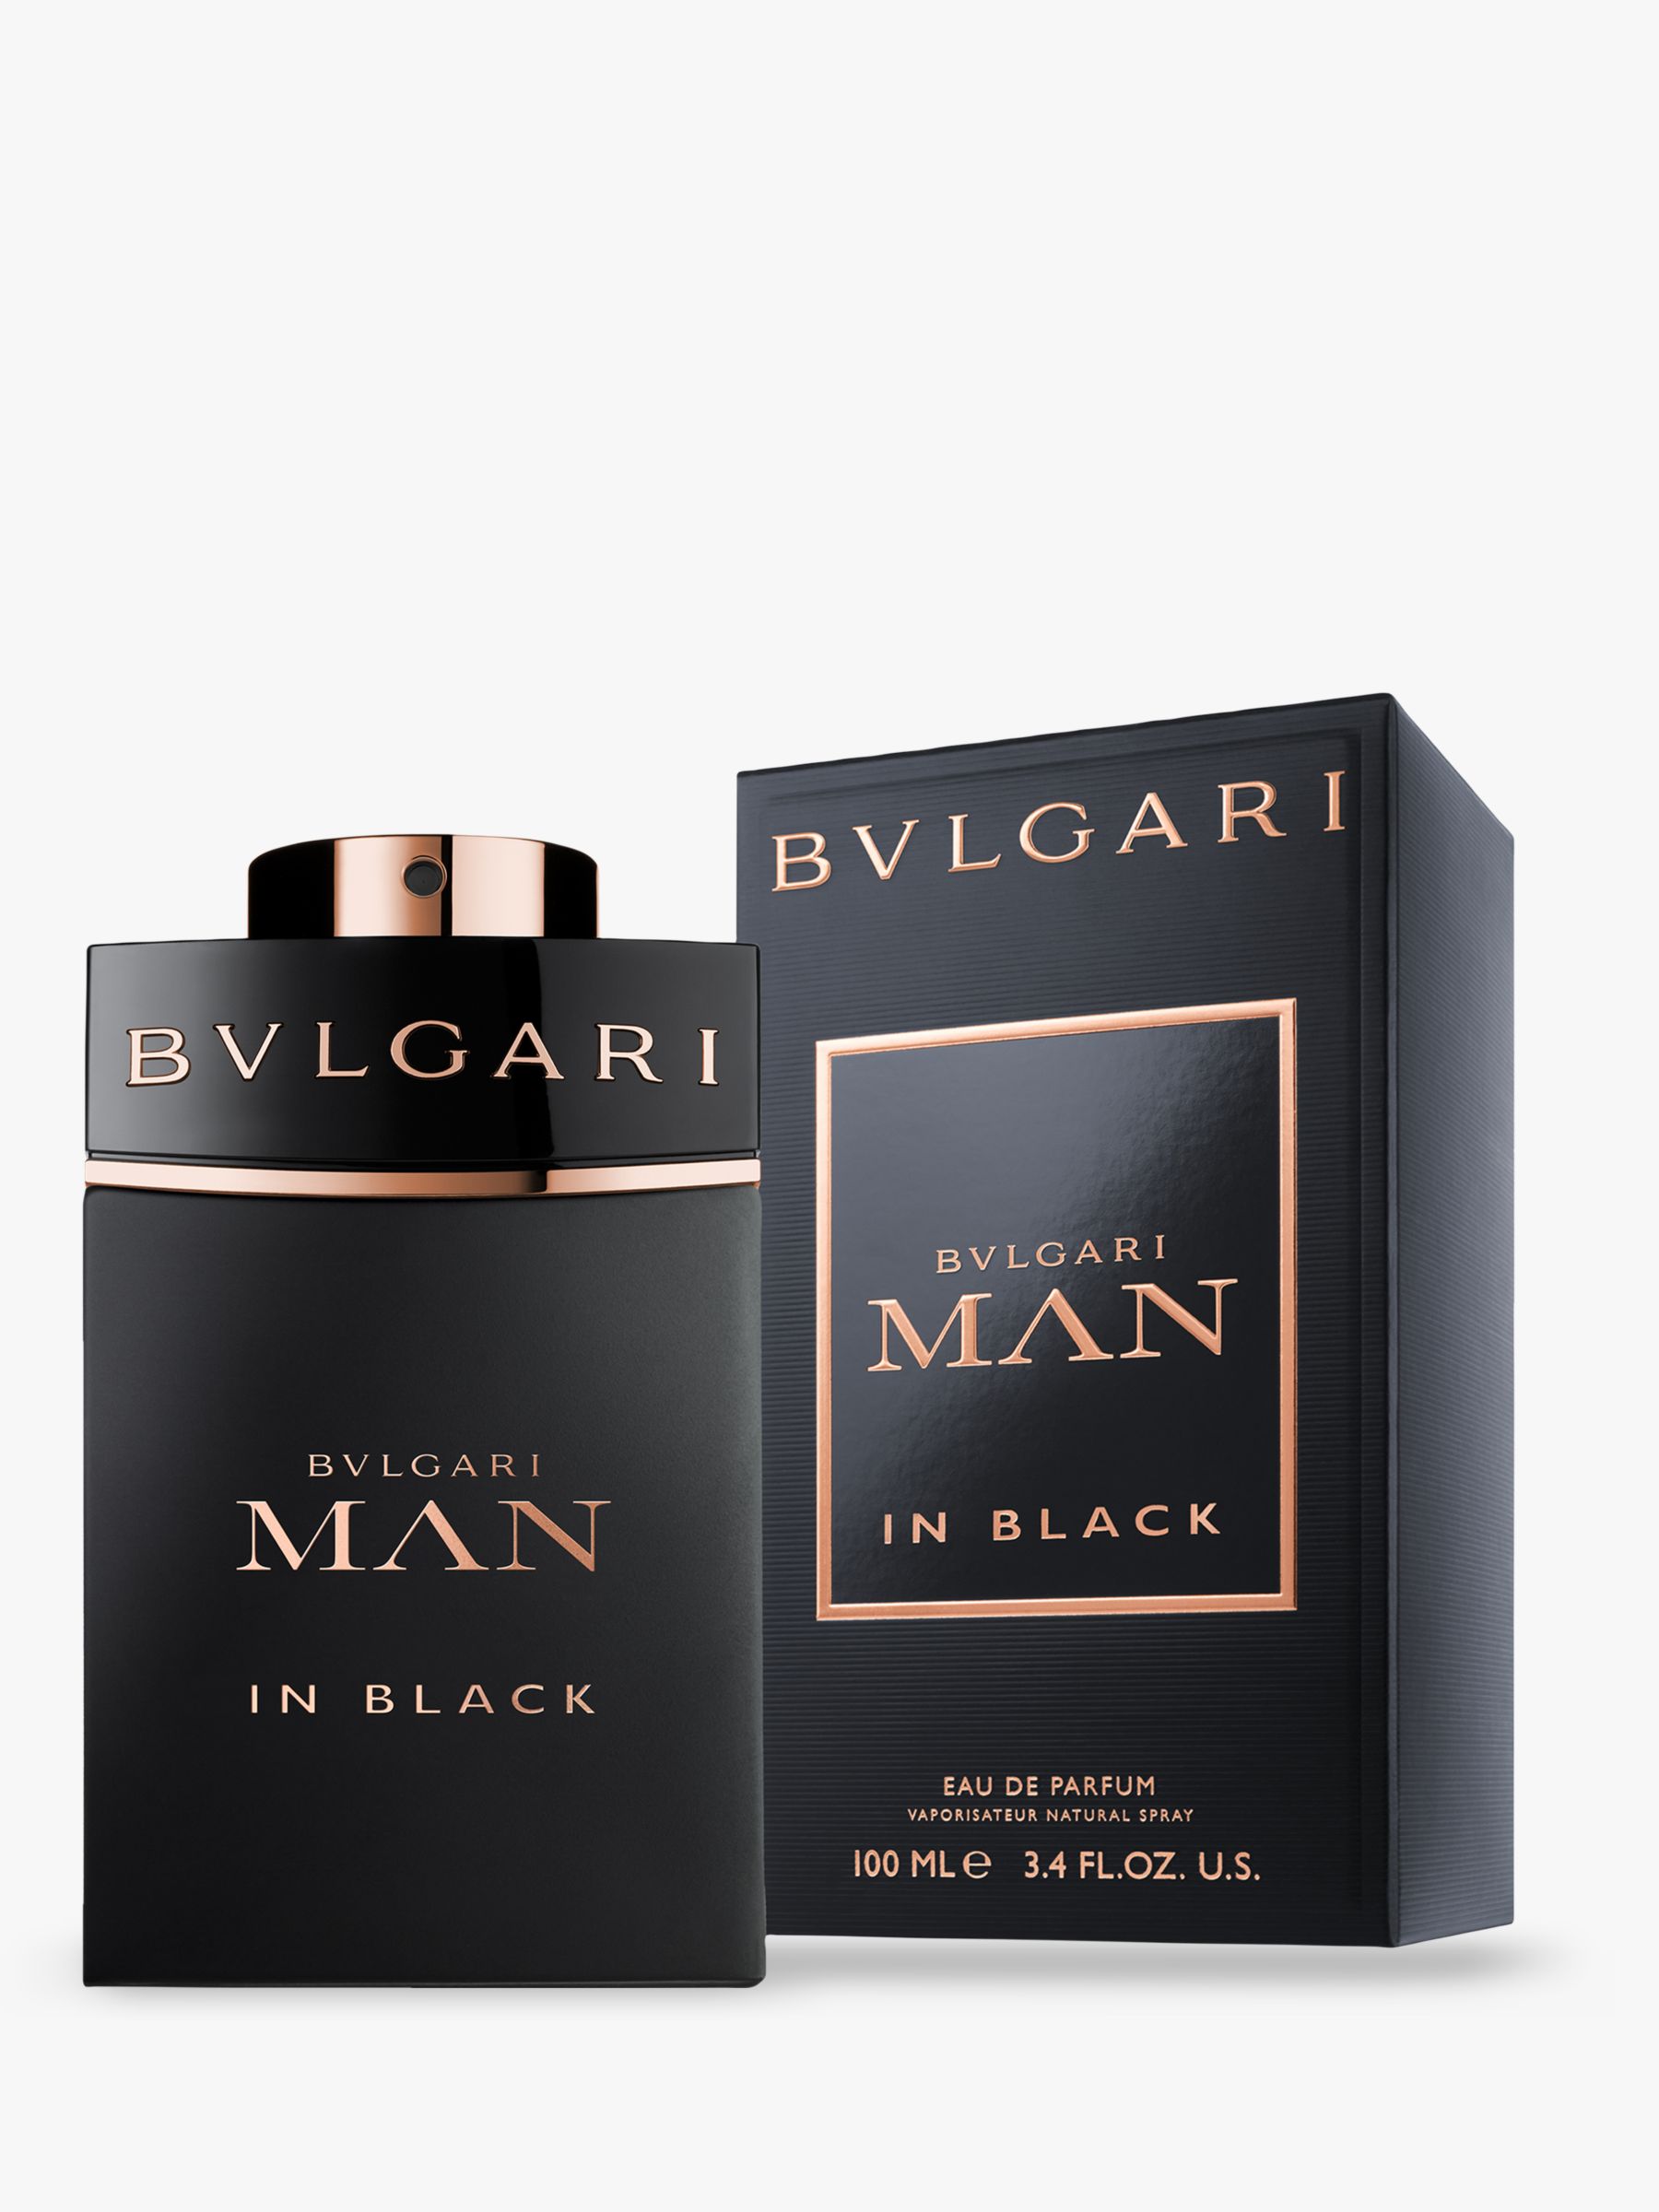 bvlgari man in black 2014